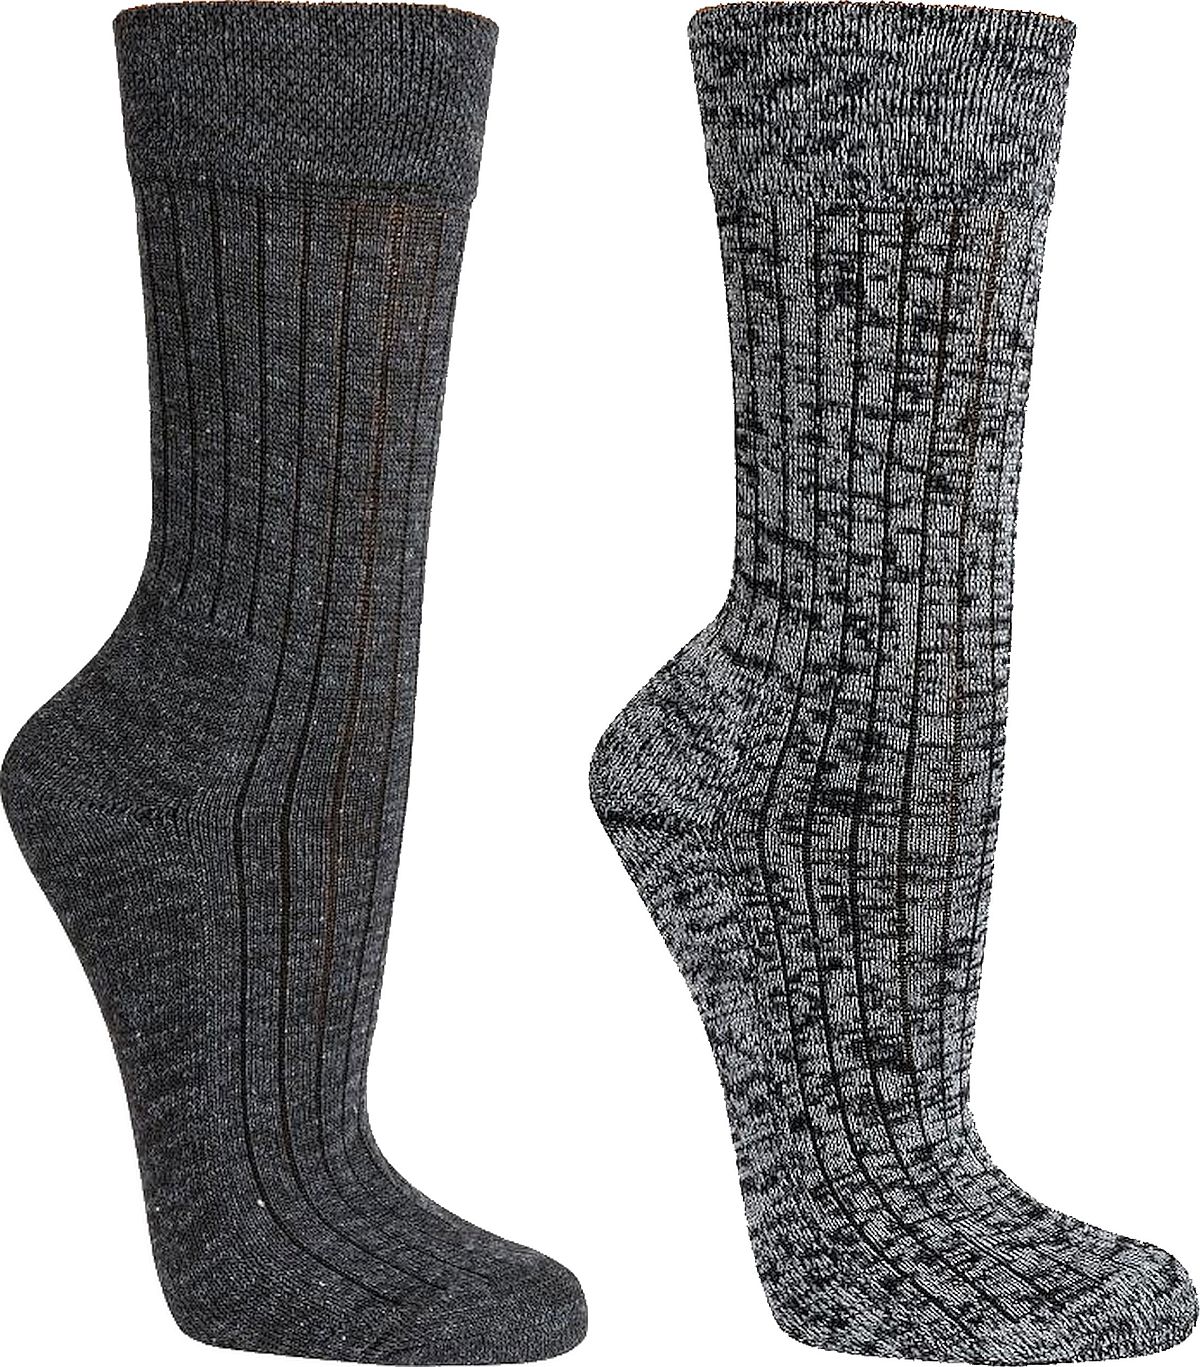 Multicolour Socken  Öko-Tex-Label zertifiziert. Piqué-Komfortbund 2er-Bündel